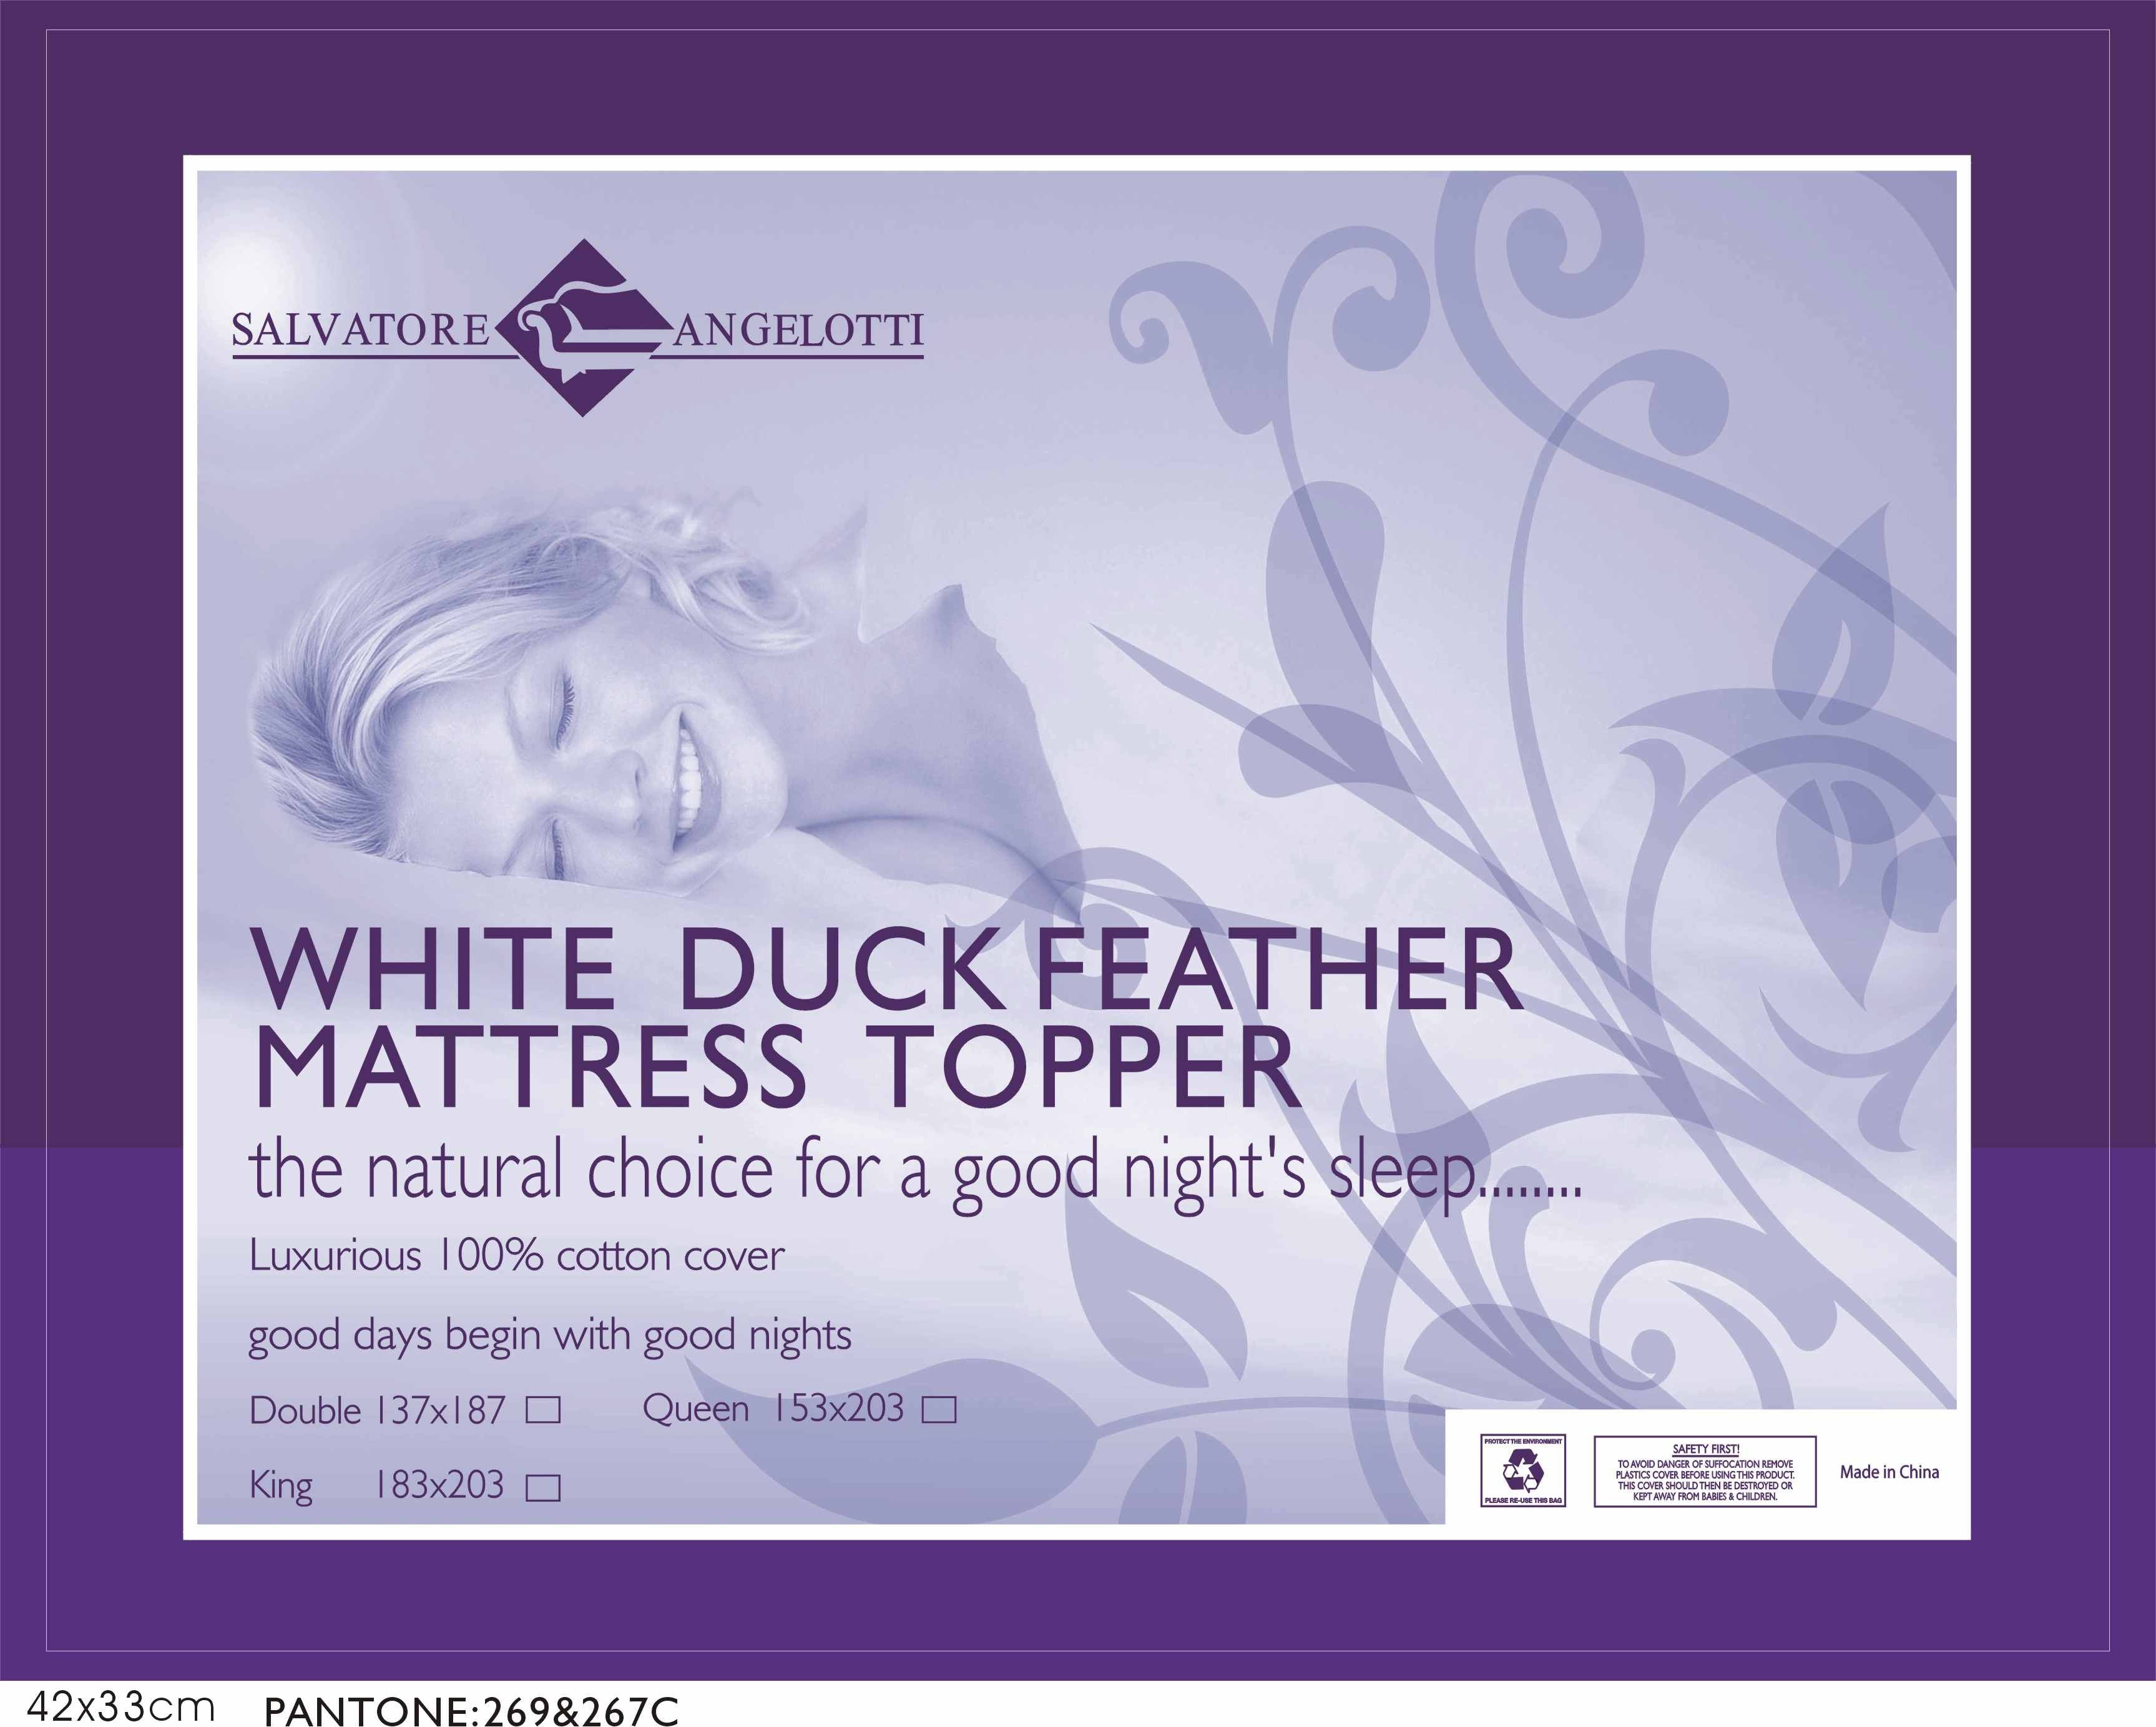 King Single Mattress Topper - 100% Duck Feather